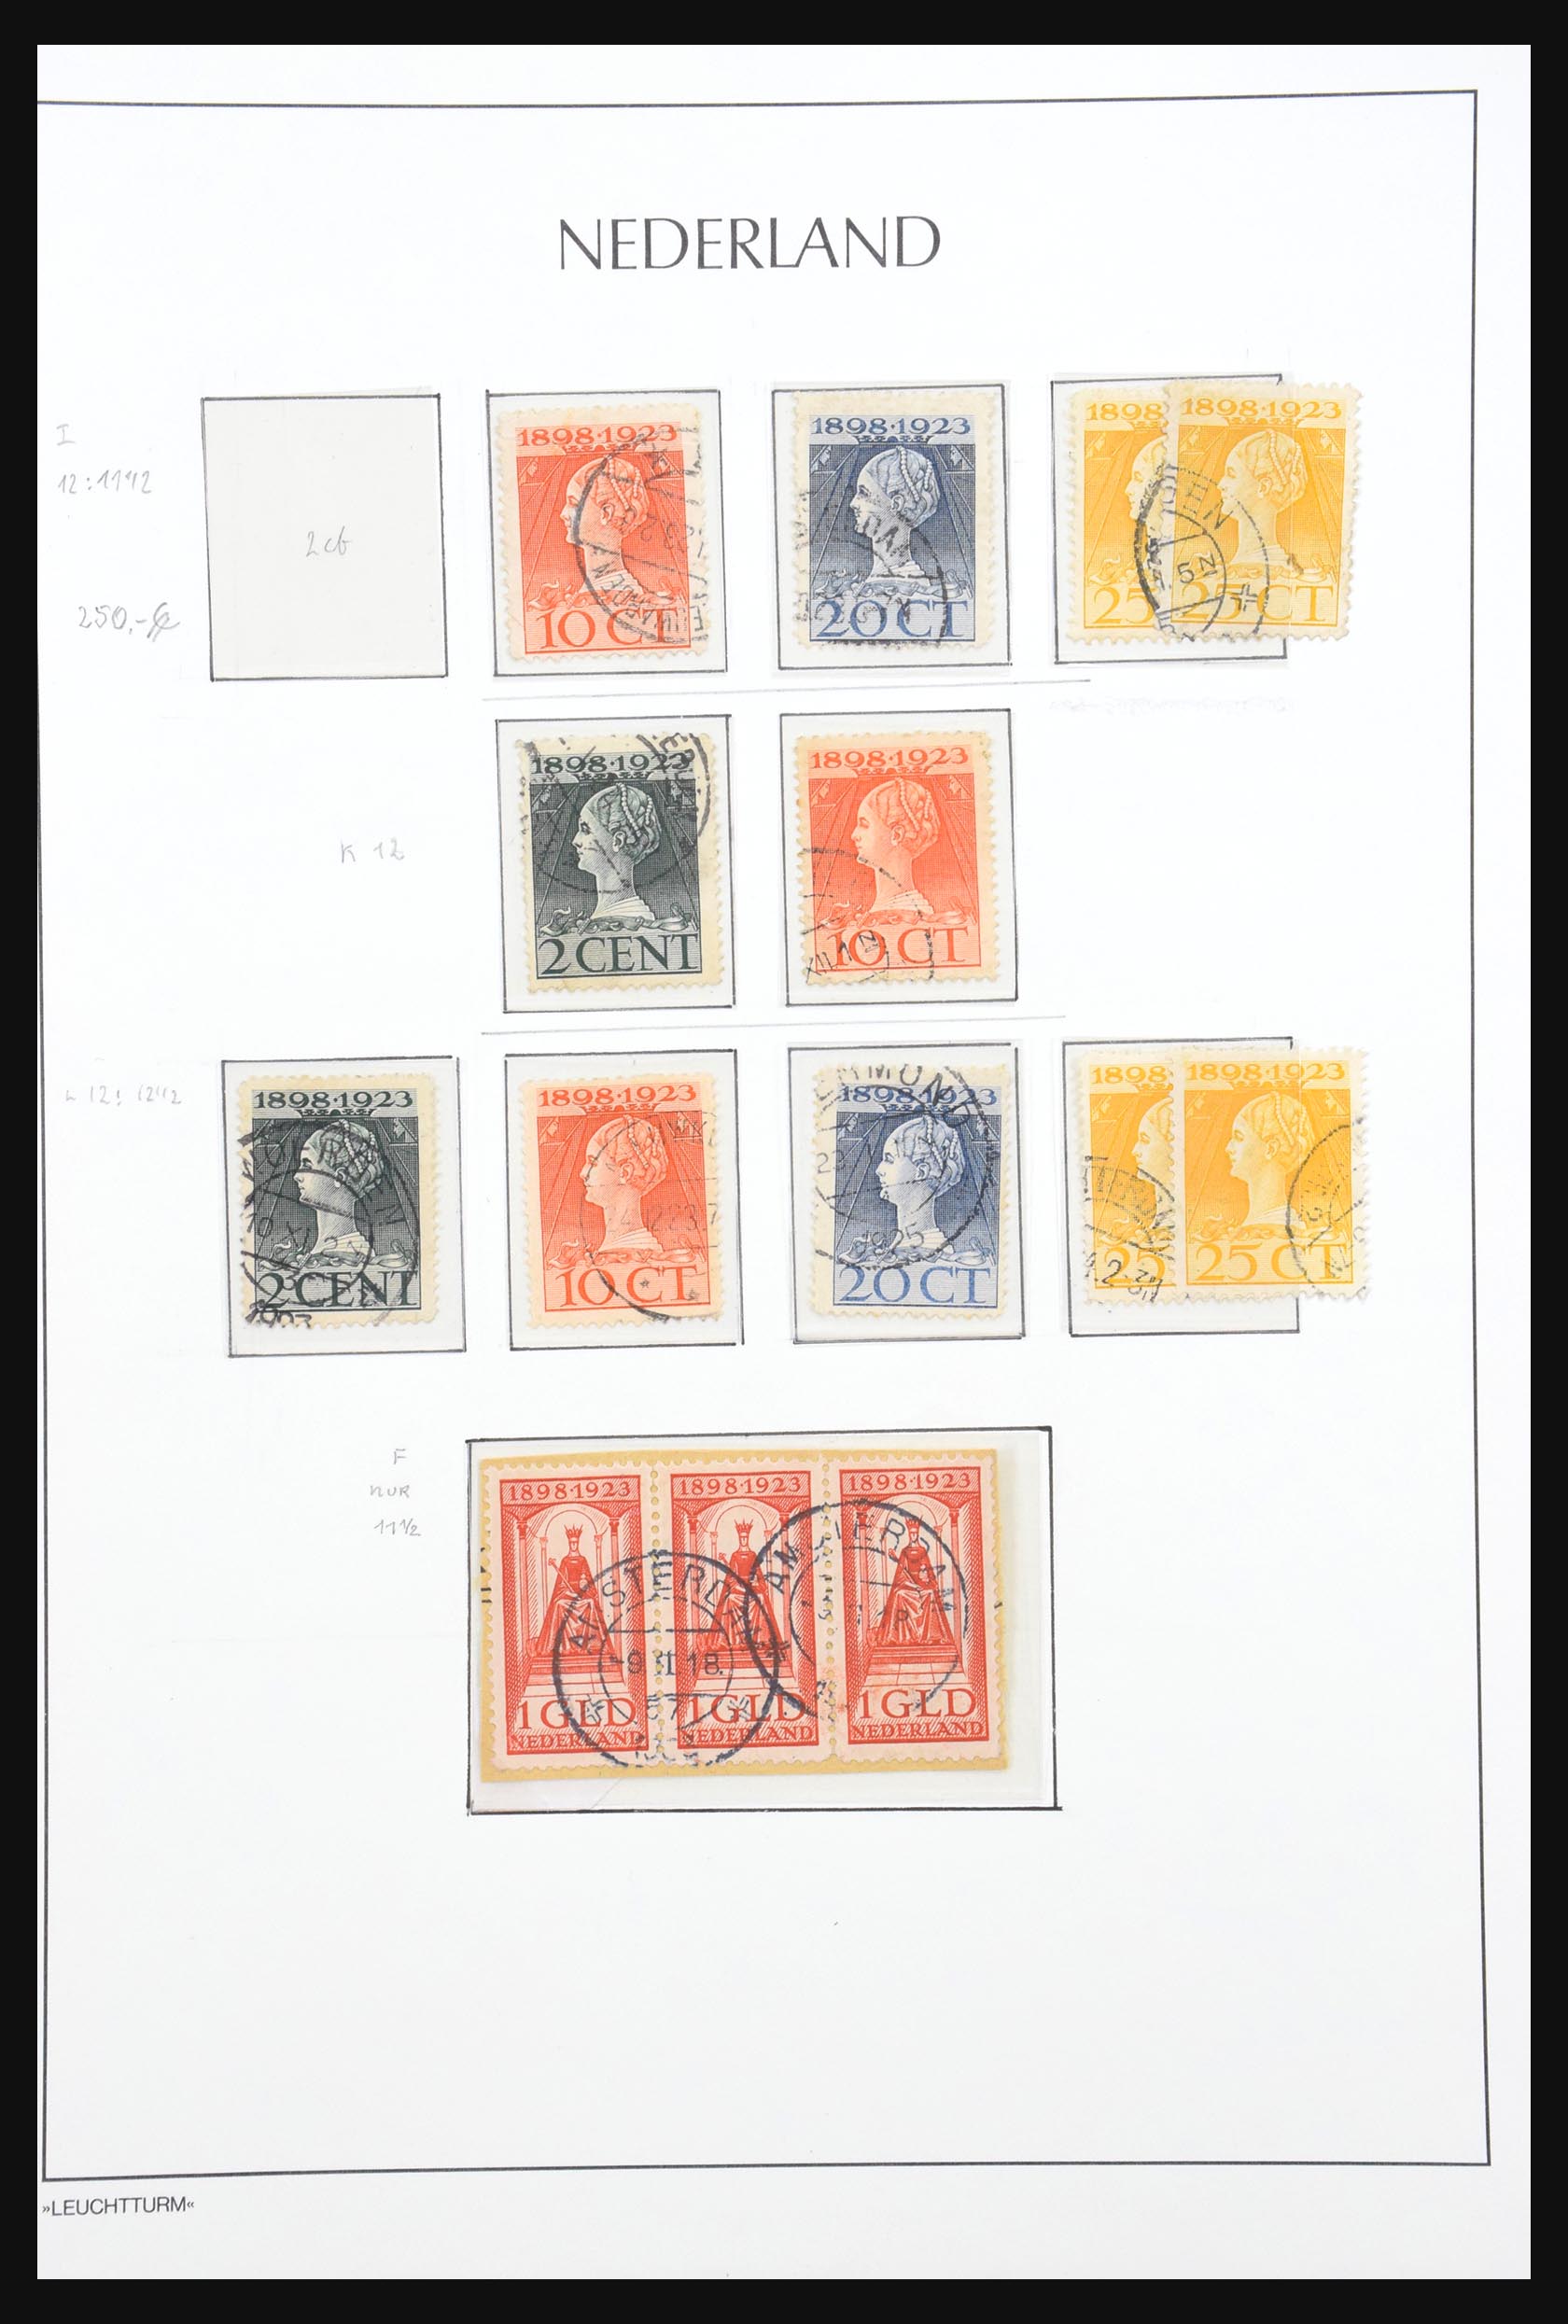 31320 100 - 31320 Netherlands 1852-1959.